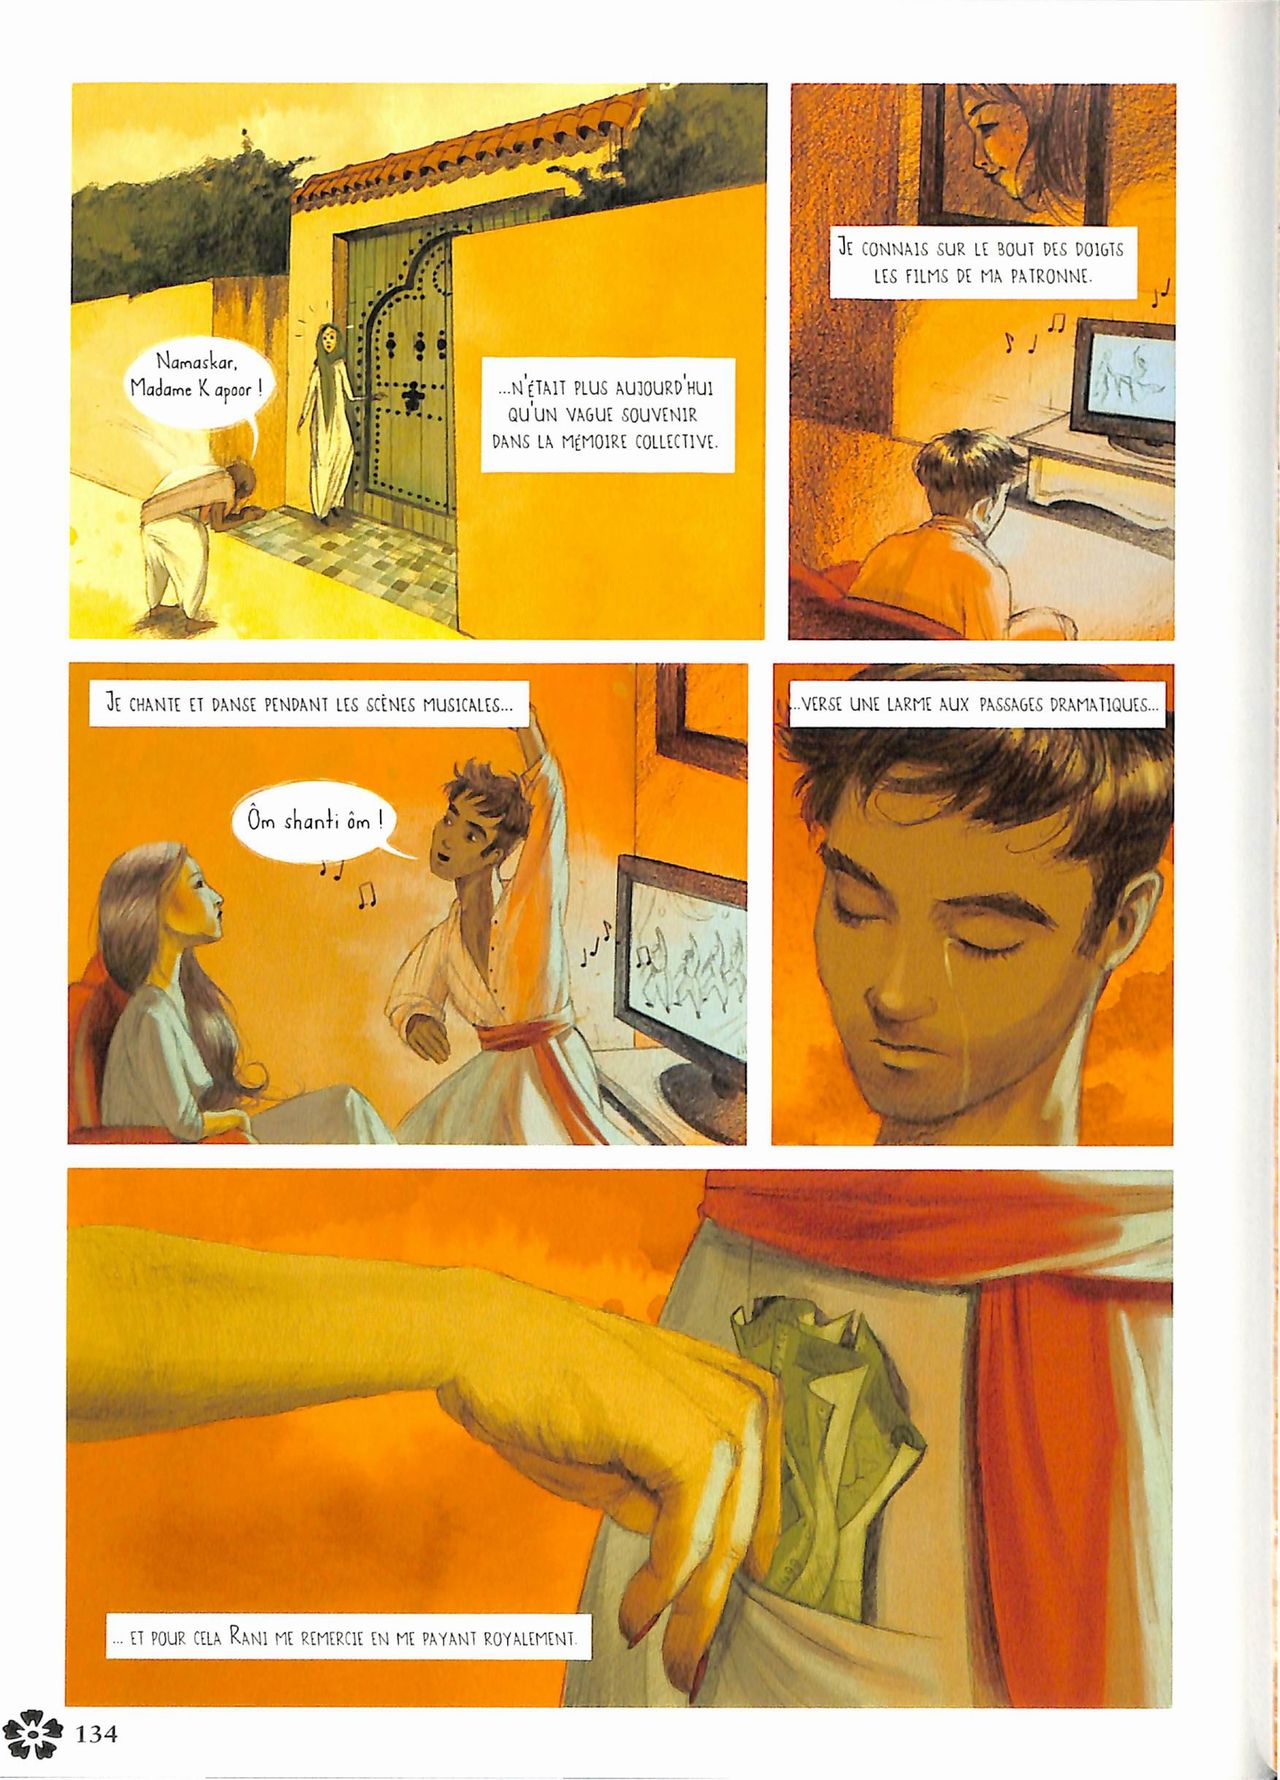 Kama Sutra en bandes dessinées - Kama Sutra with Comics numero d'image 134